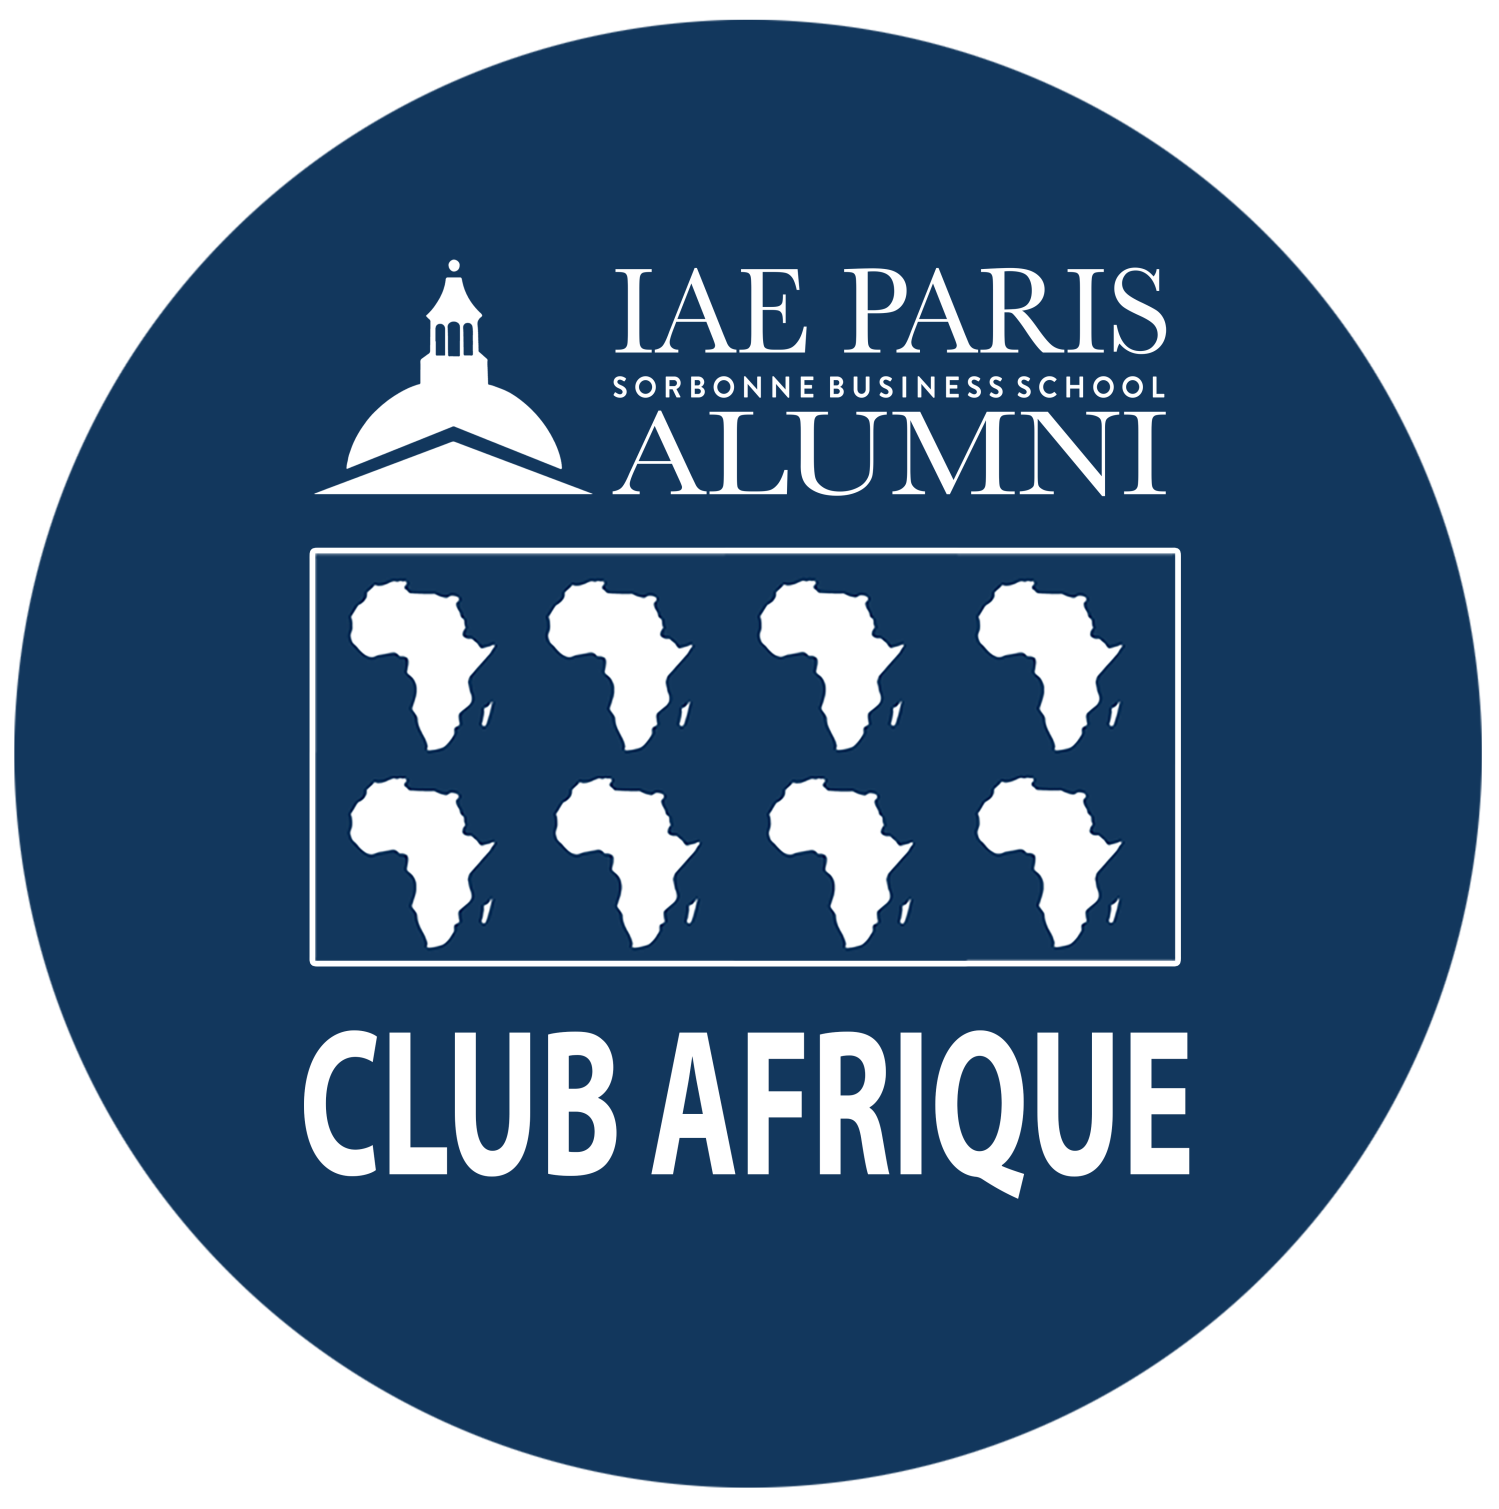 Alumni IAE PARIS SORBONNE